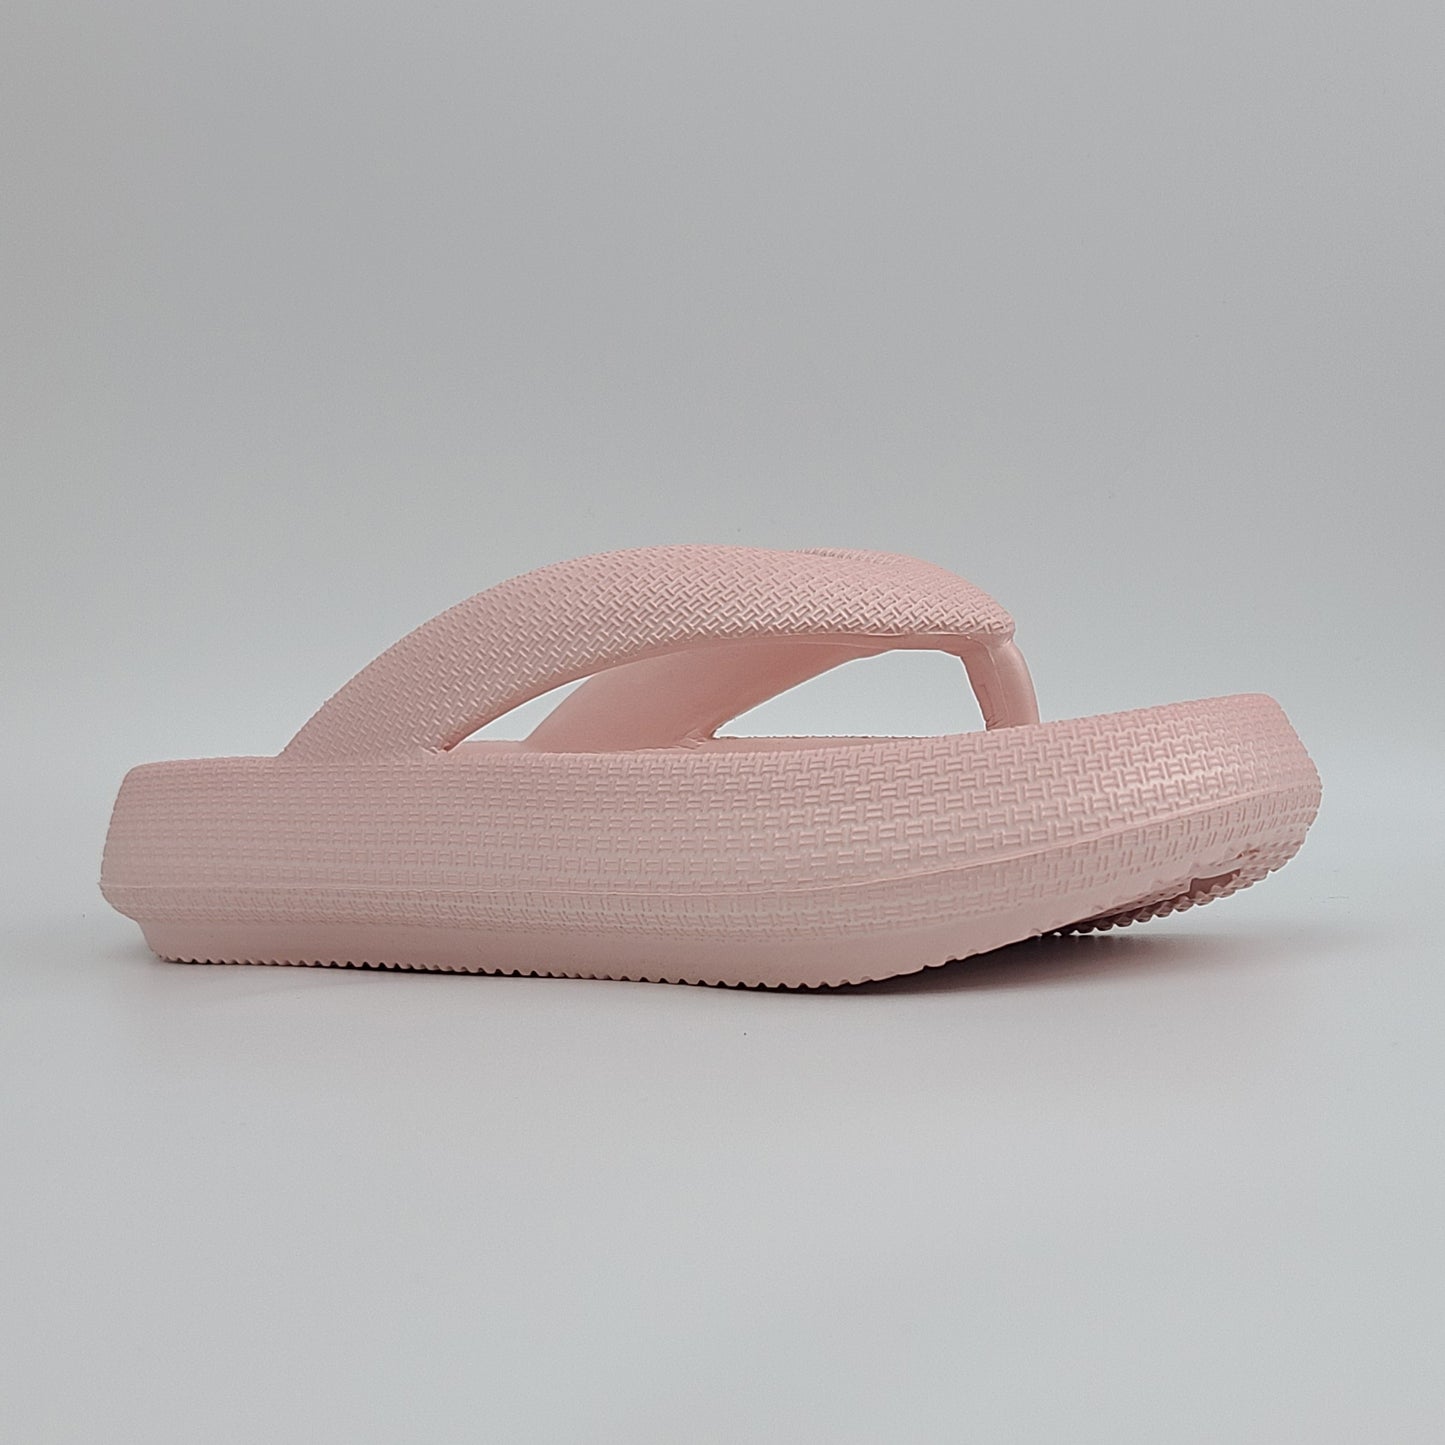 Arch Support Flip-Flops W 6-7 / Pink